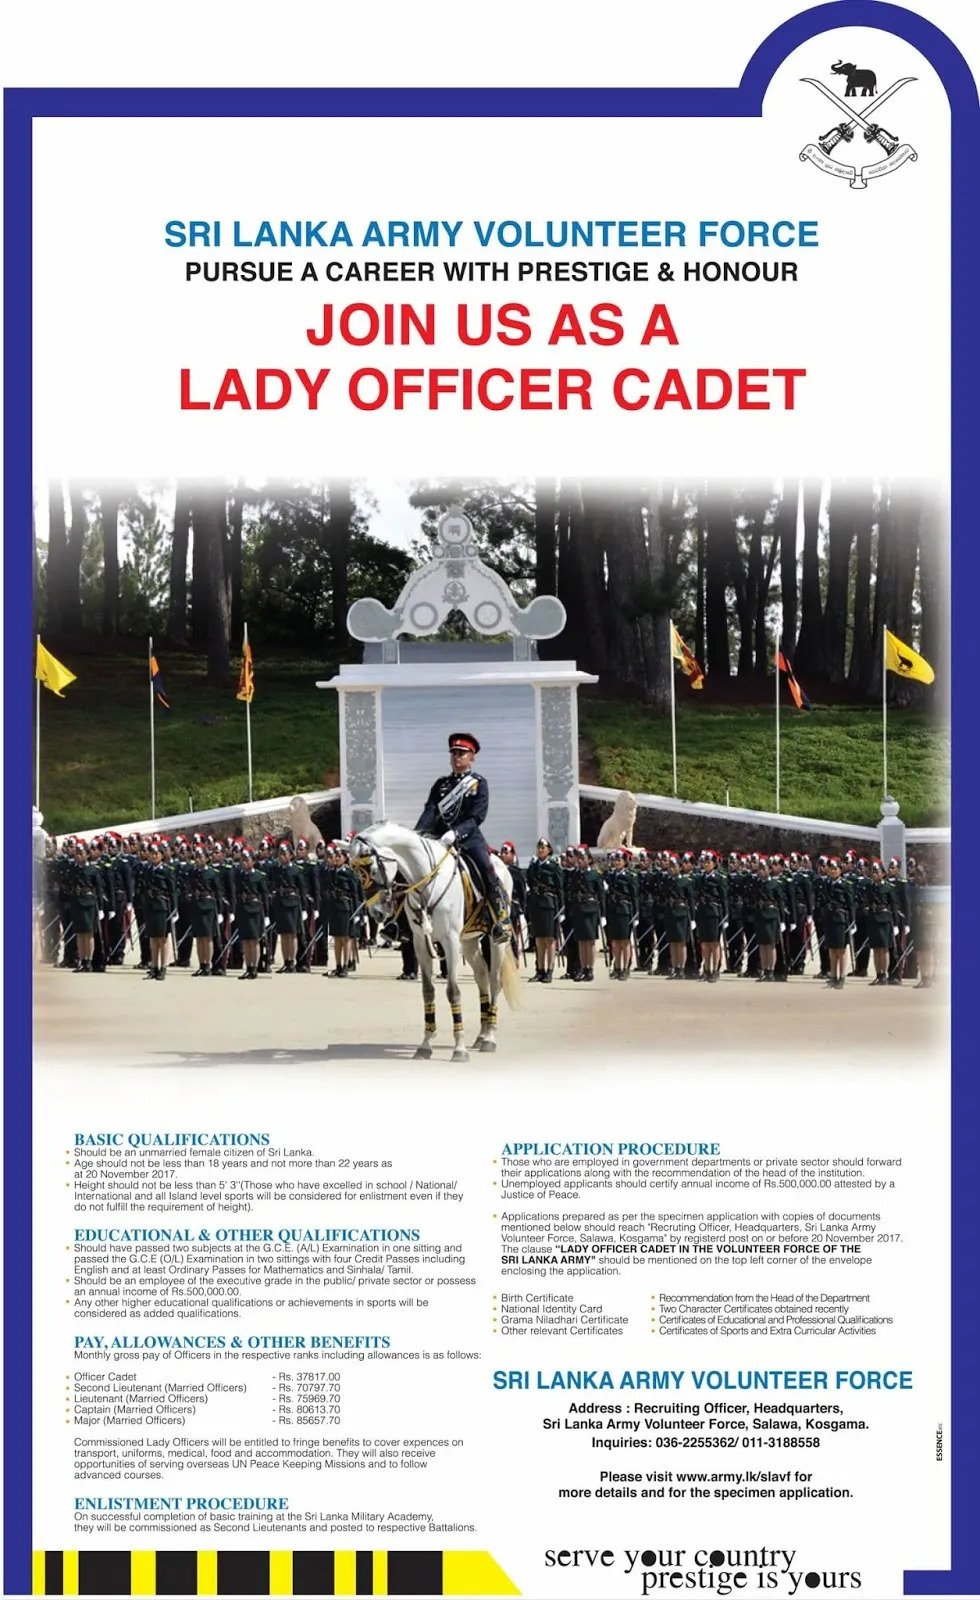 Sri Lanka Army Volunteer Force Vacancies for Lady Officer Cadet